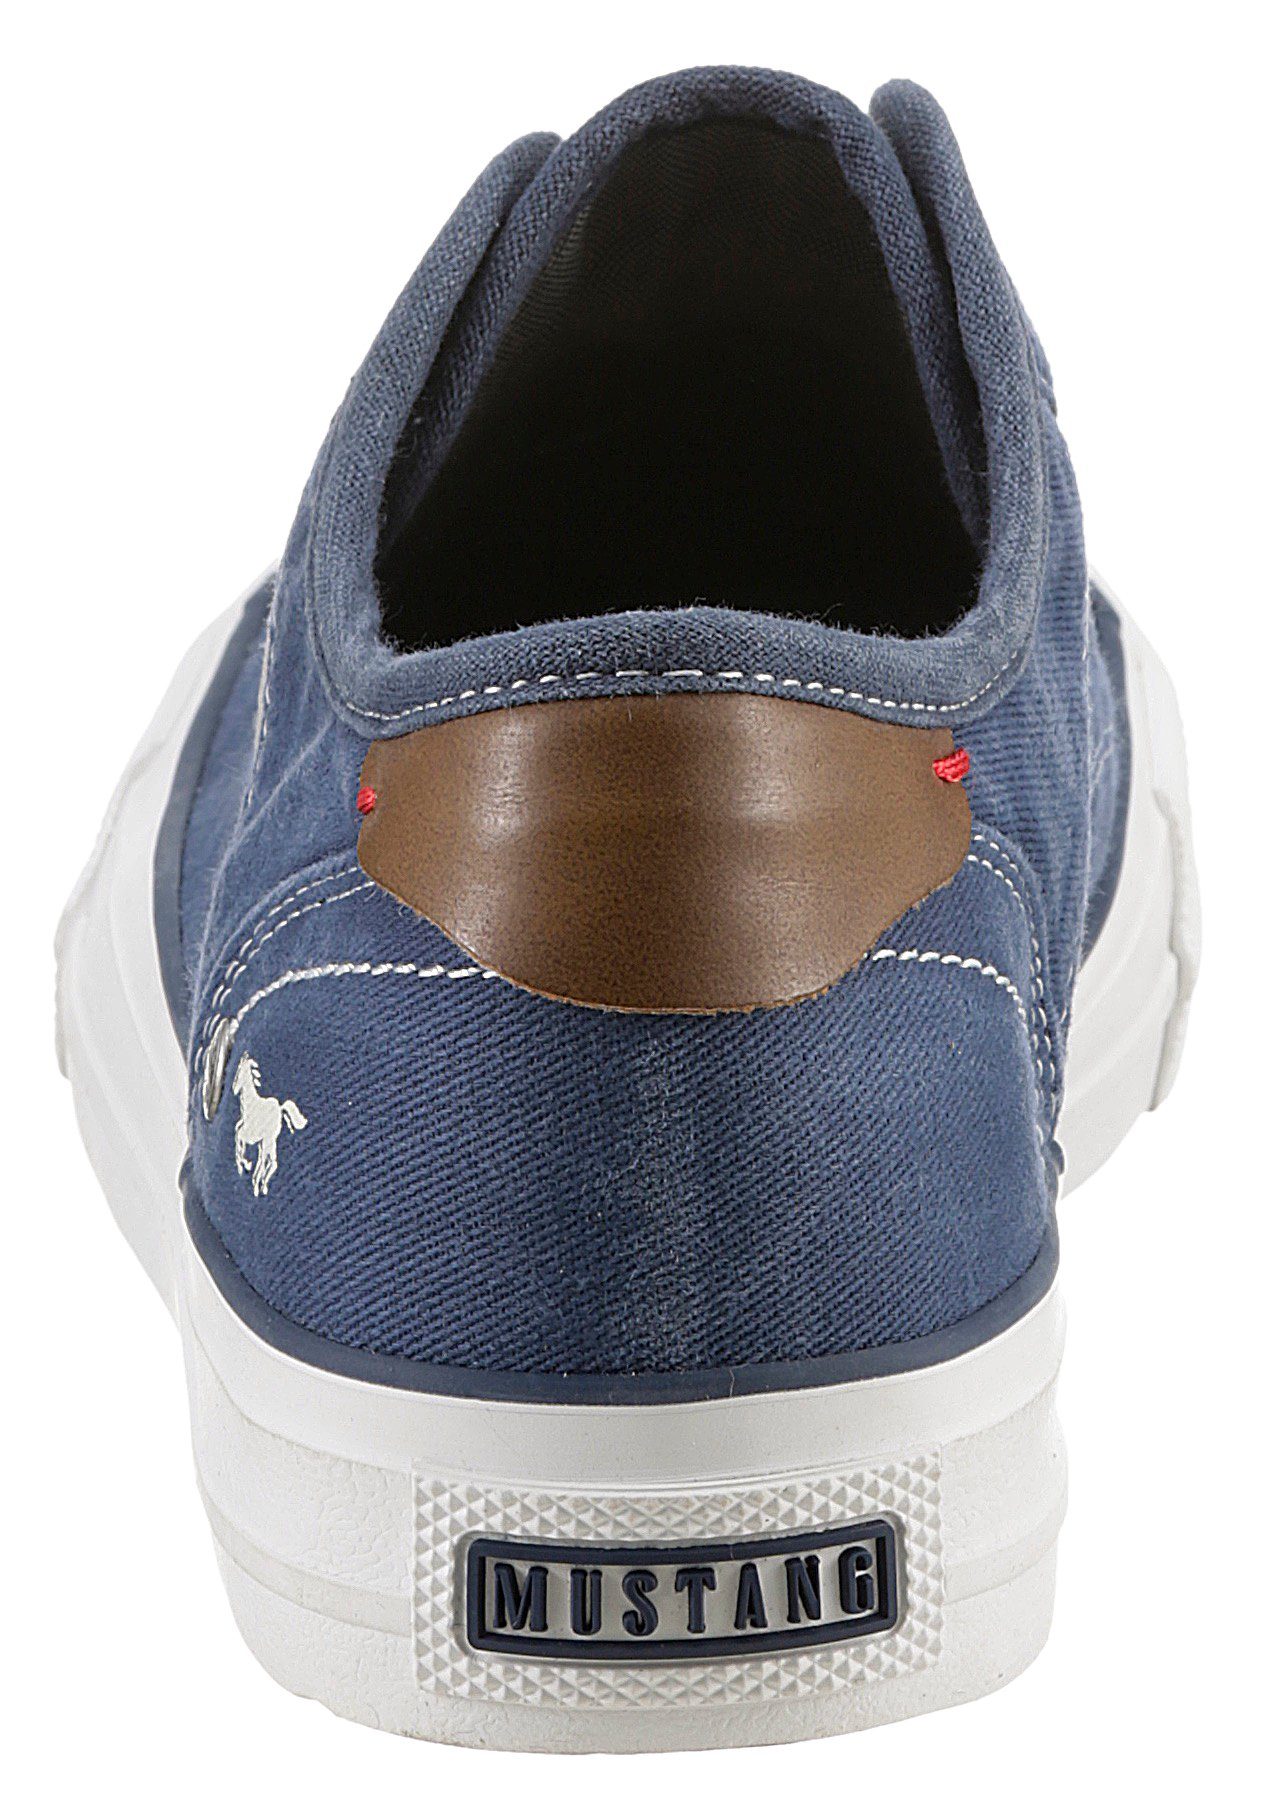 Mustang Gummizug Slip-On dunkelblau mit Shoes praktischem Sneaker